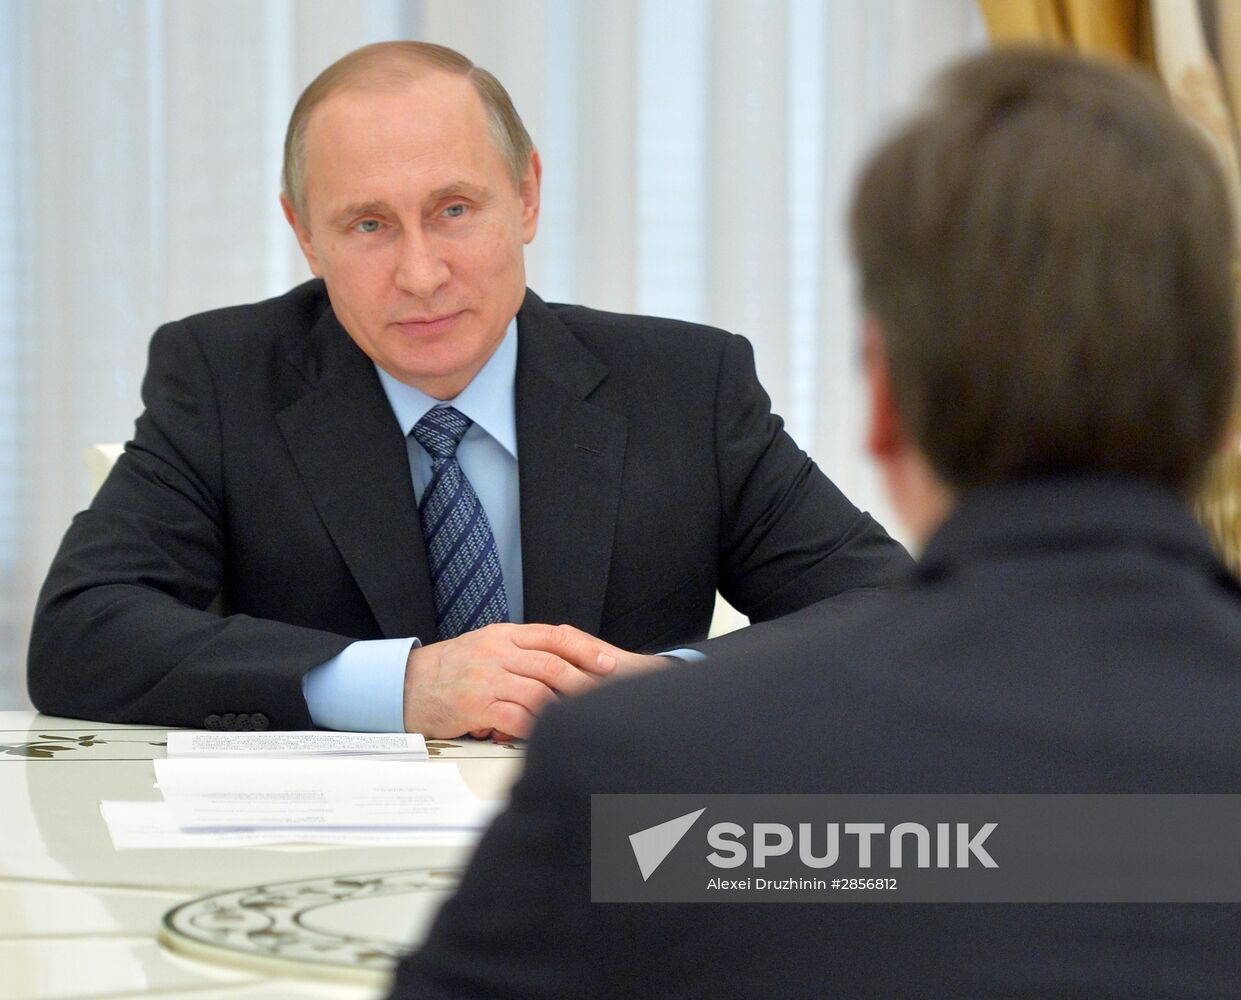 Russian President Vladimir Putin meets with Serbian Prime Minister Aleksandar Vucic